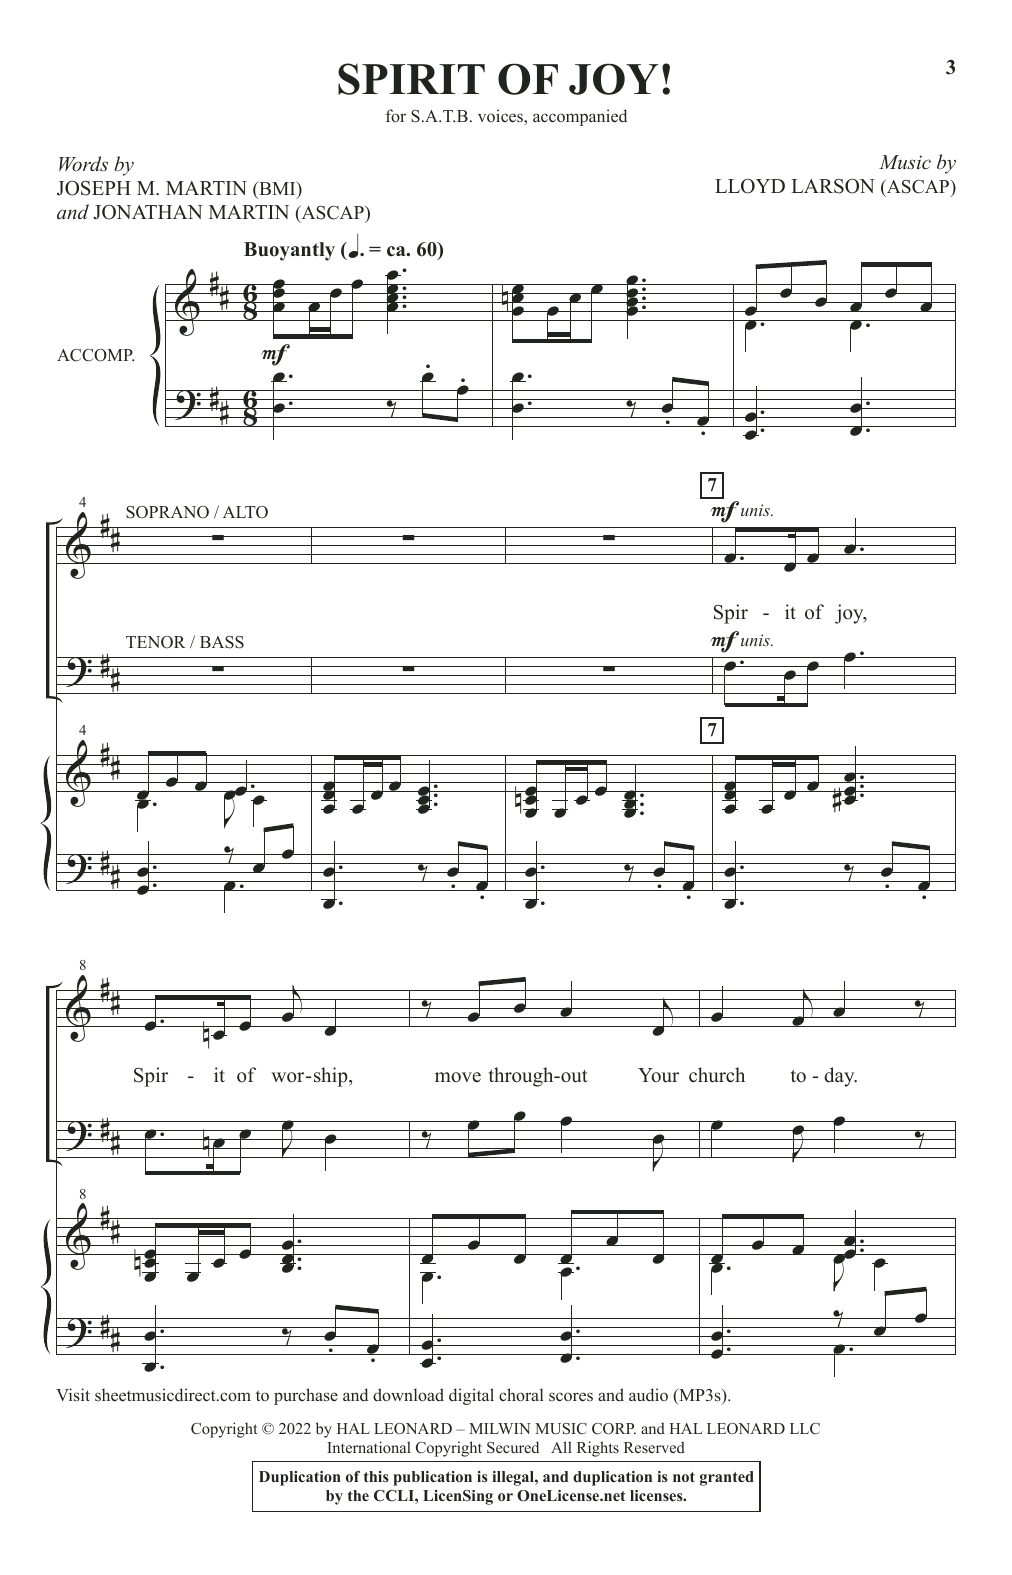 Joseph M. Martin, Jonathan Martin and Lloyd Larson Spirit Of Joy! sheet music notes and chords arranged for SATB Choir